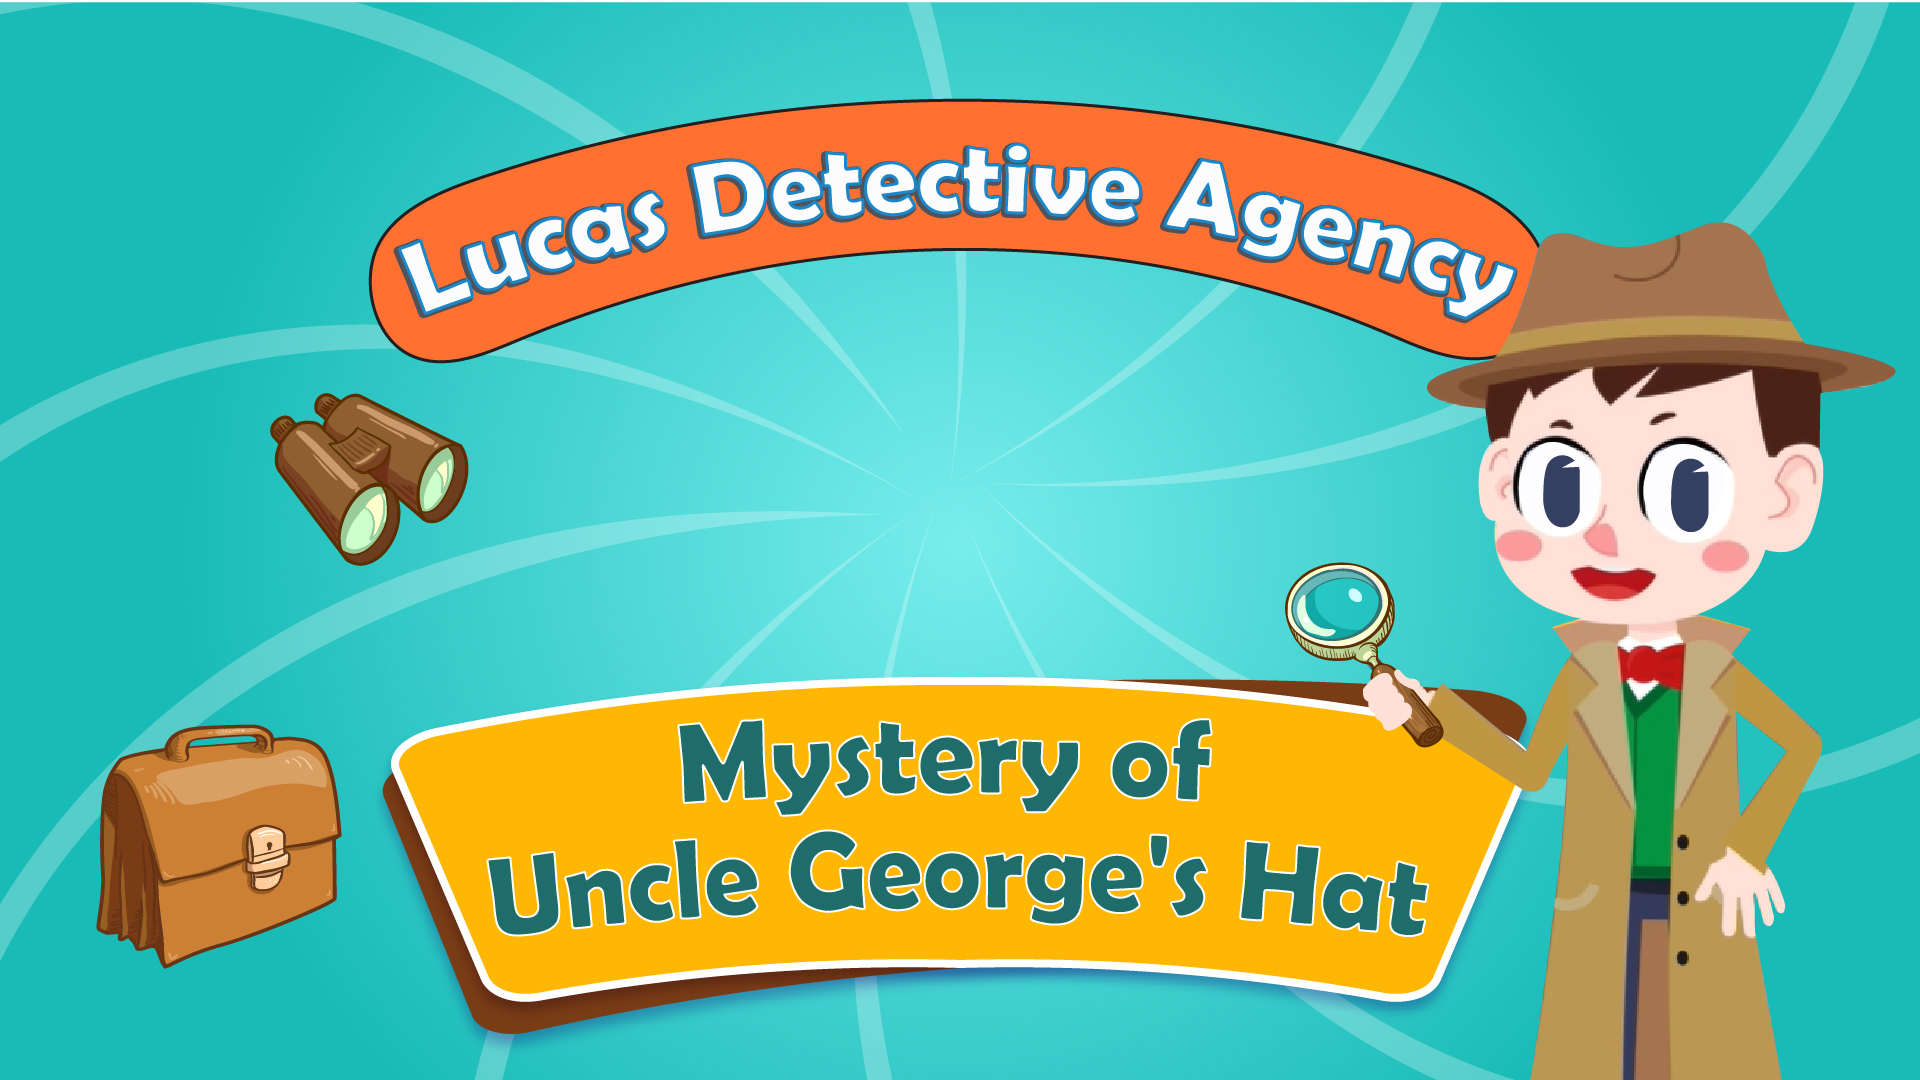 Uncle George’s Missing Hat